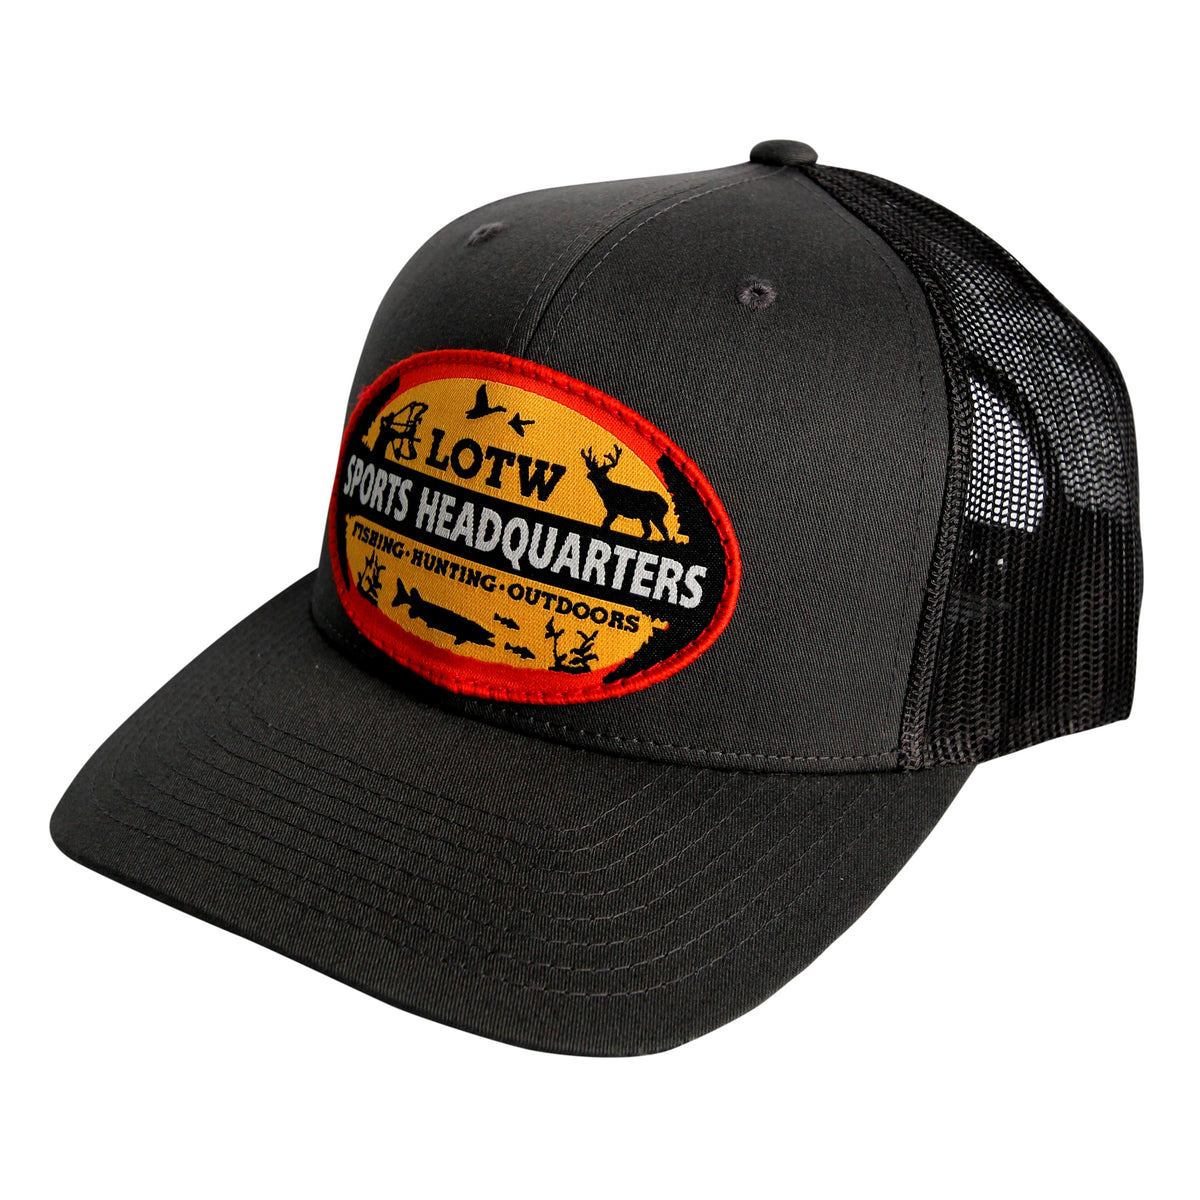 LOTW Sports Headquarters Retro Snapback Trucker Hats - Charcoal